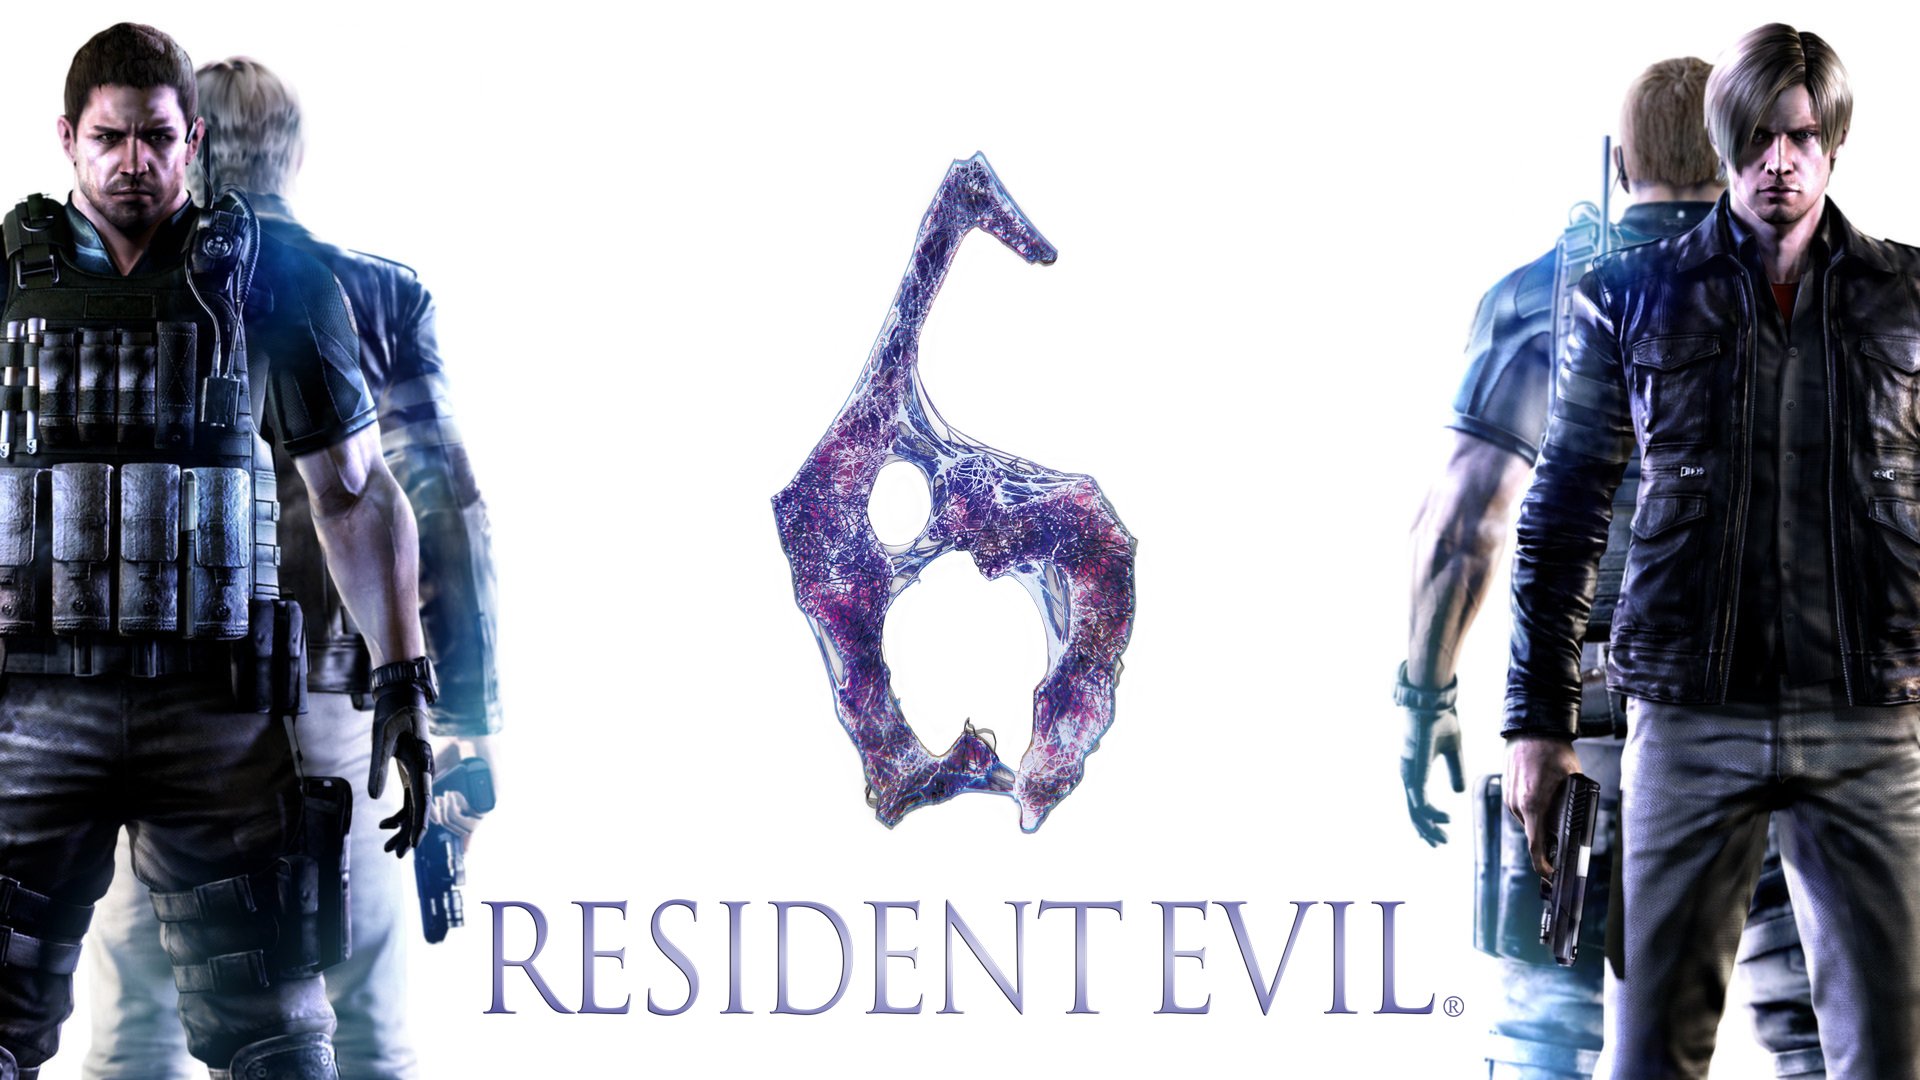 Resident evil 6 - обои в разделе Мужчины.